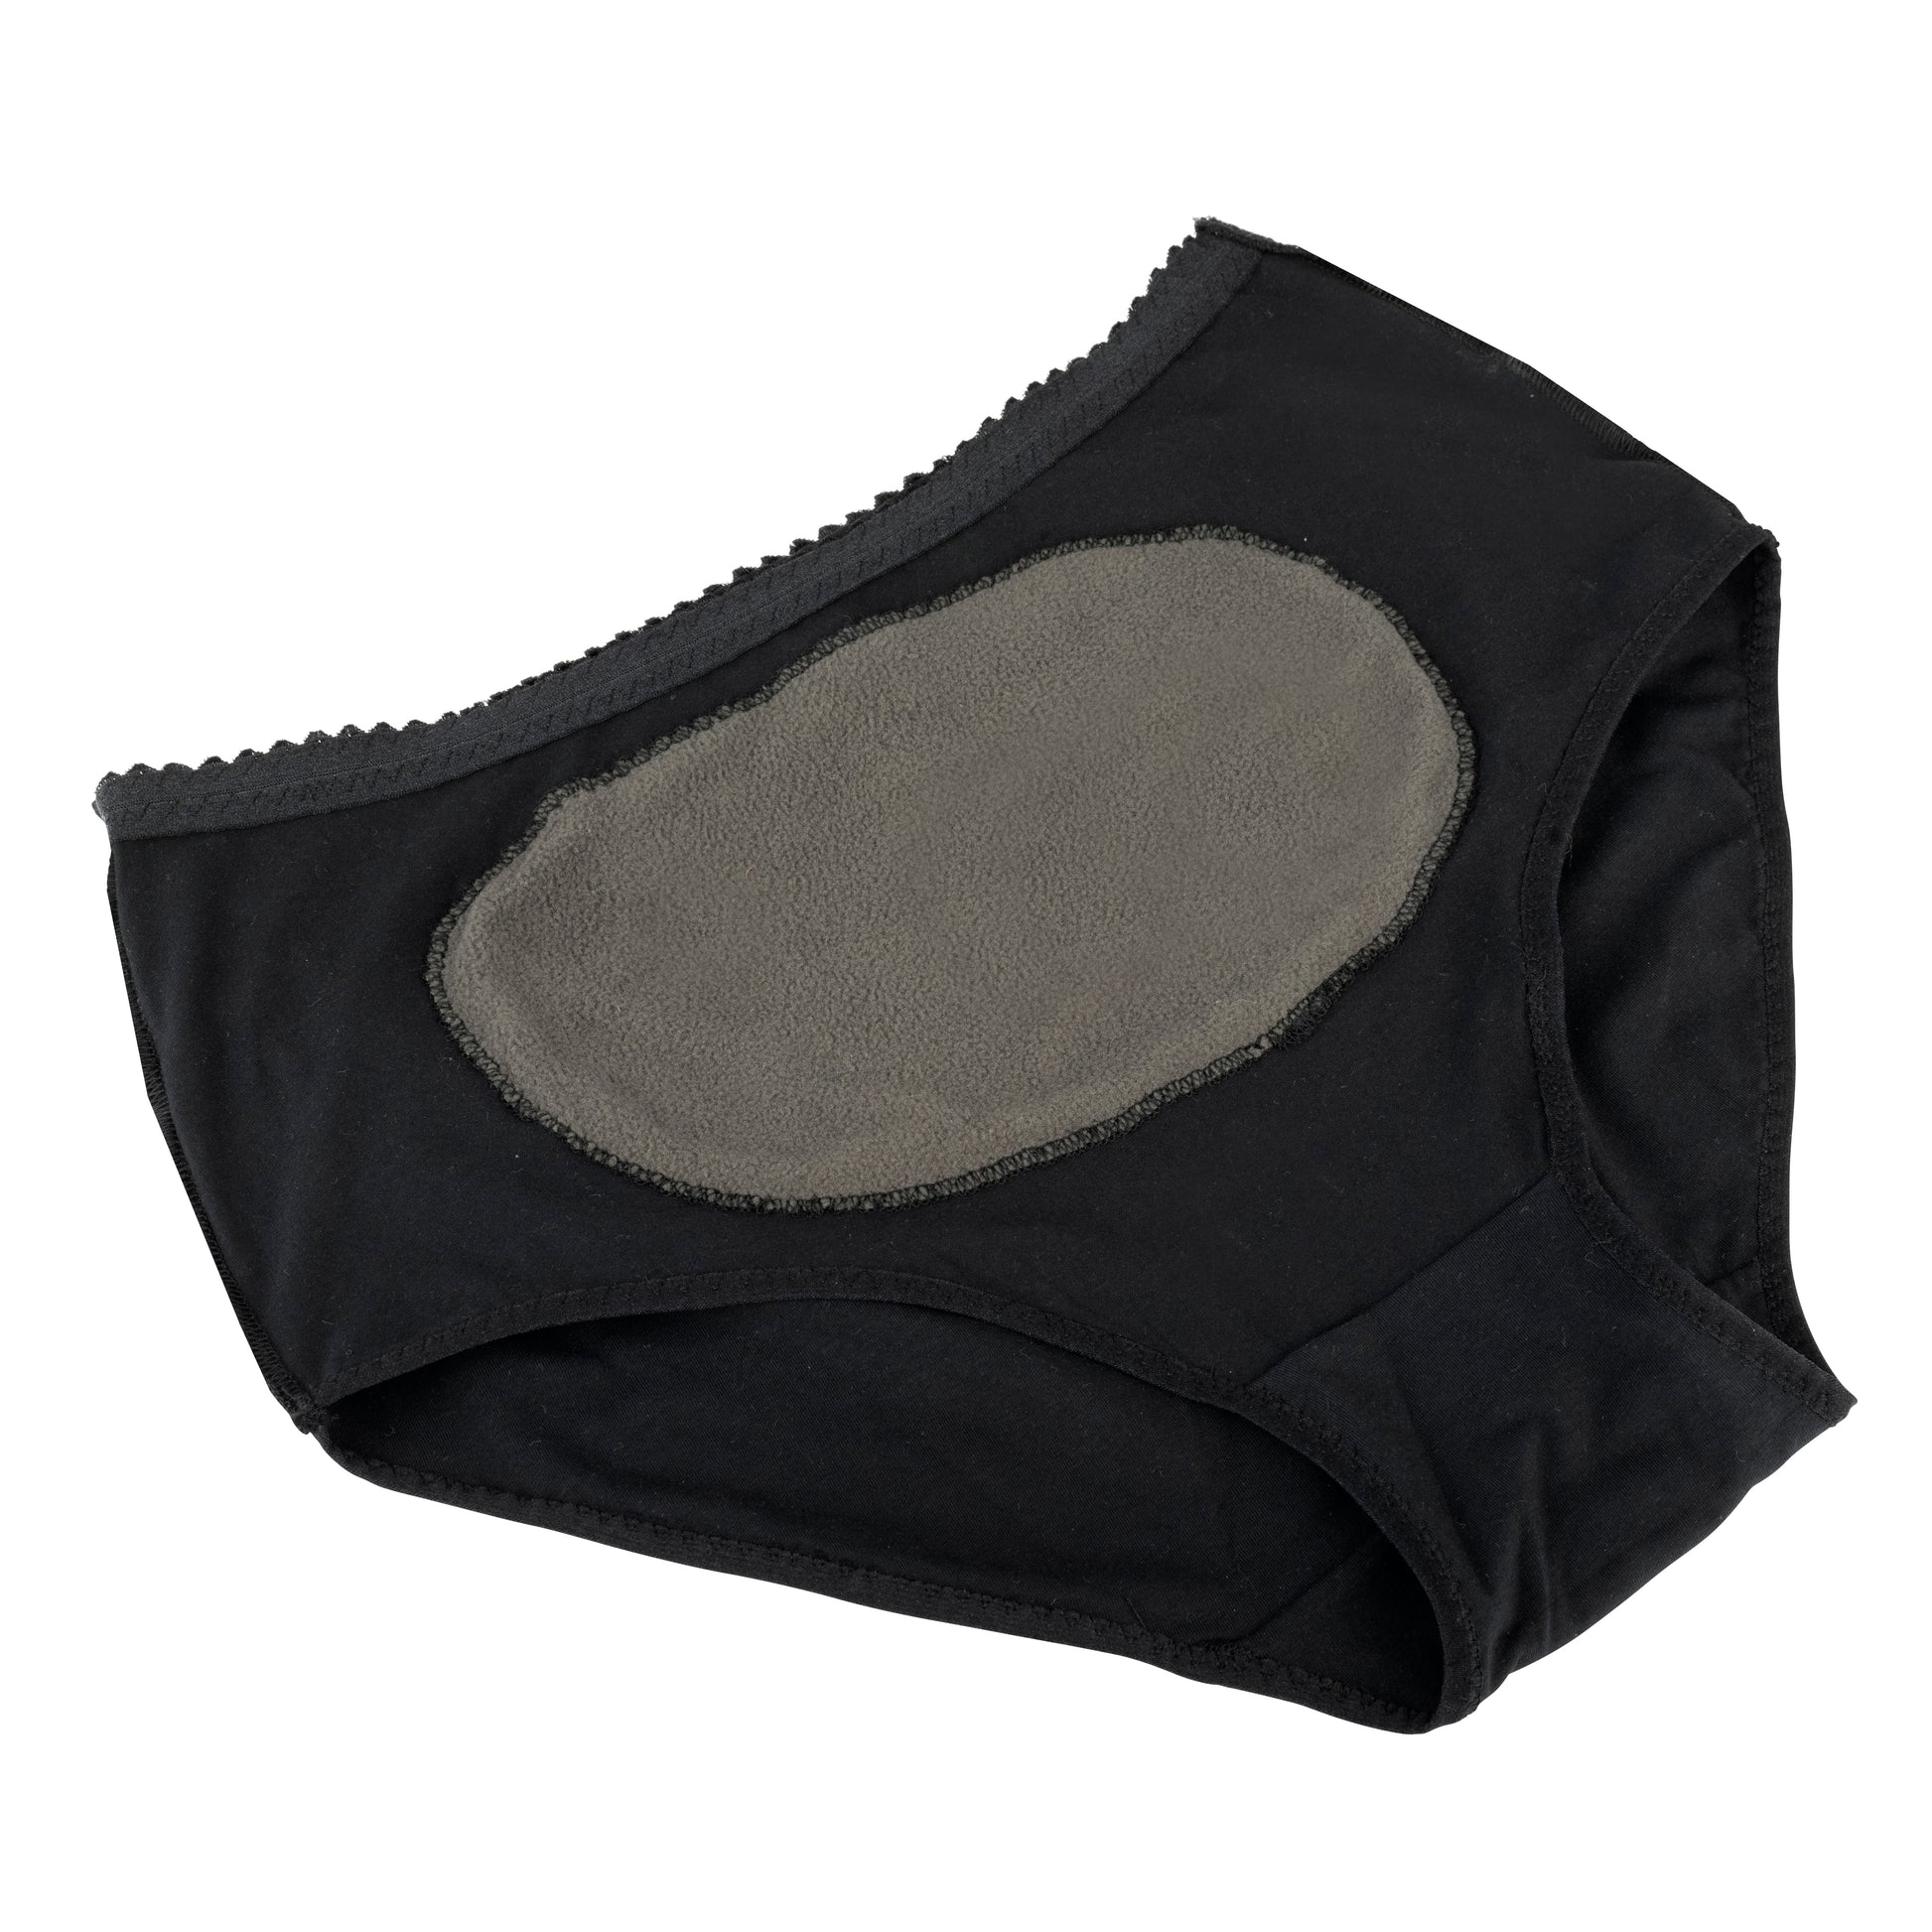 C-Panty Classic Waist C-Section Recovery Underwear Kuwait